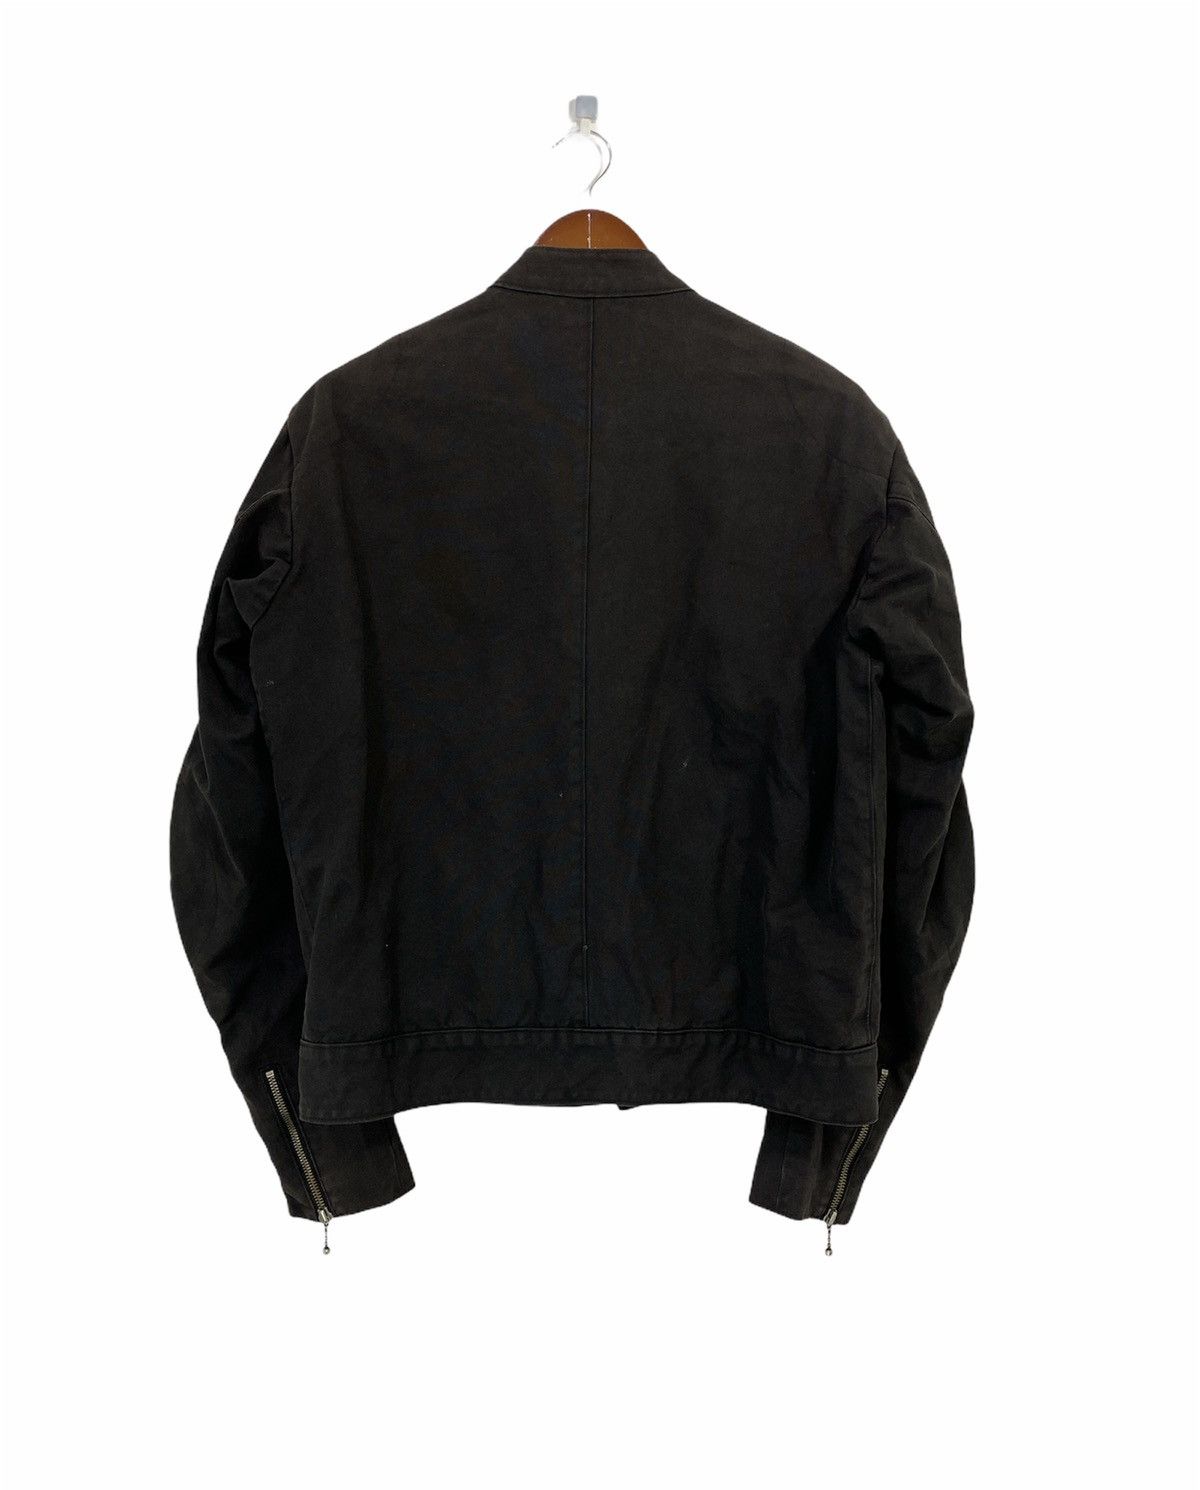 Beams International Gallery Biker Jacket Design Black Color - 2